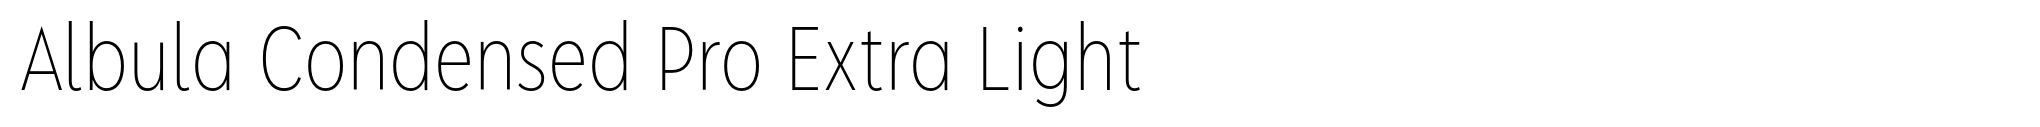 Albula Condensed Pro Extra Light image